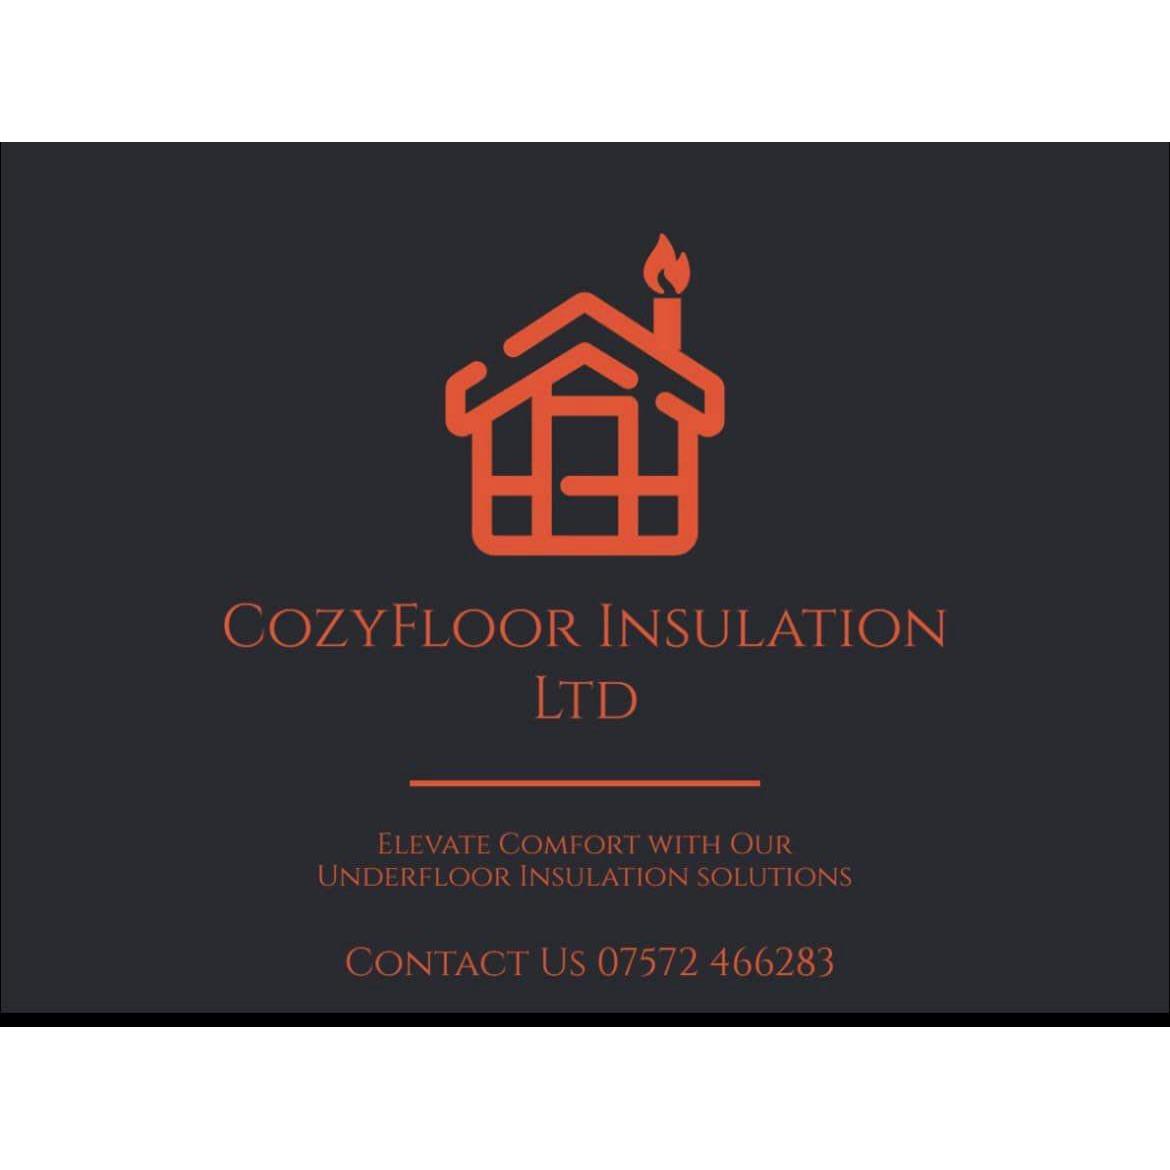 Cozyfloor Insulation Ltd - Barnsley, South Yorkshire S71 4AR - 07572 466283 | ShowMeLocal.com